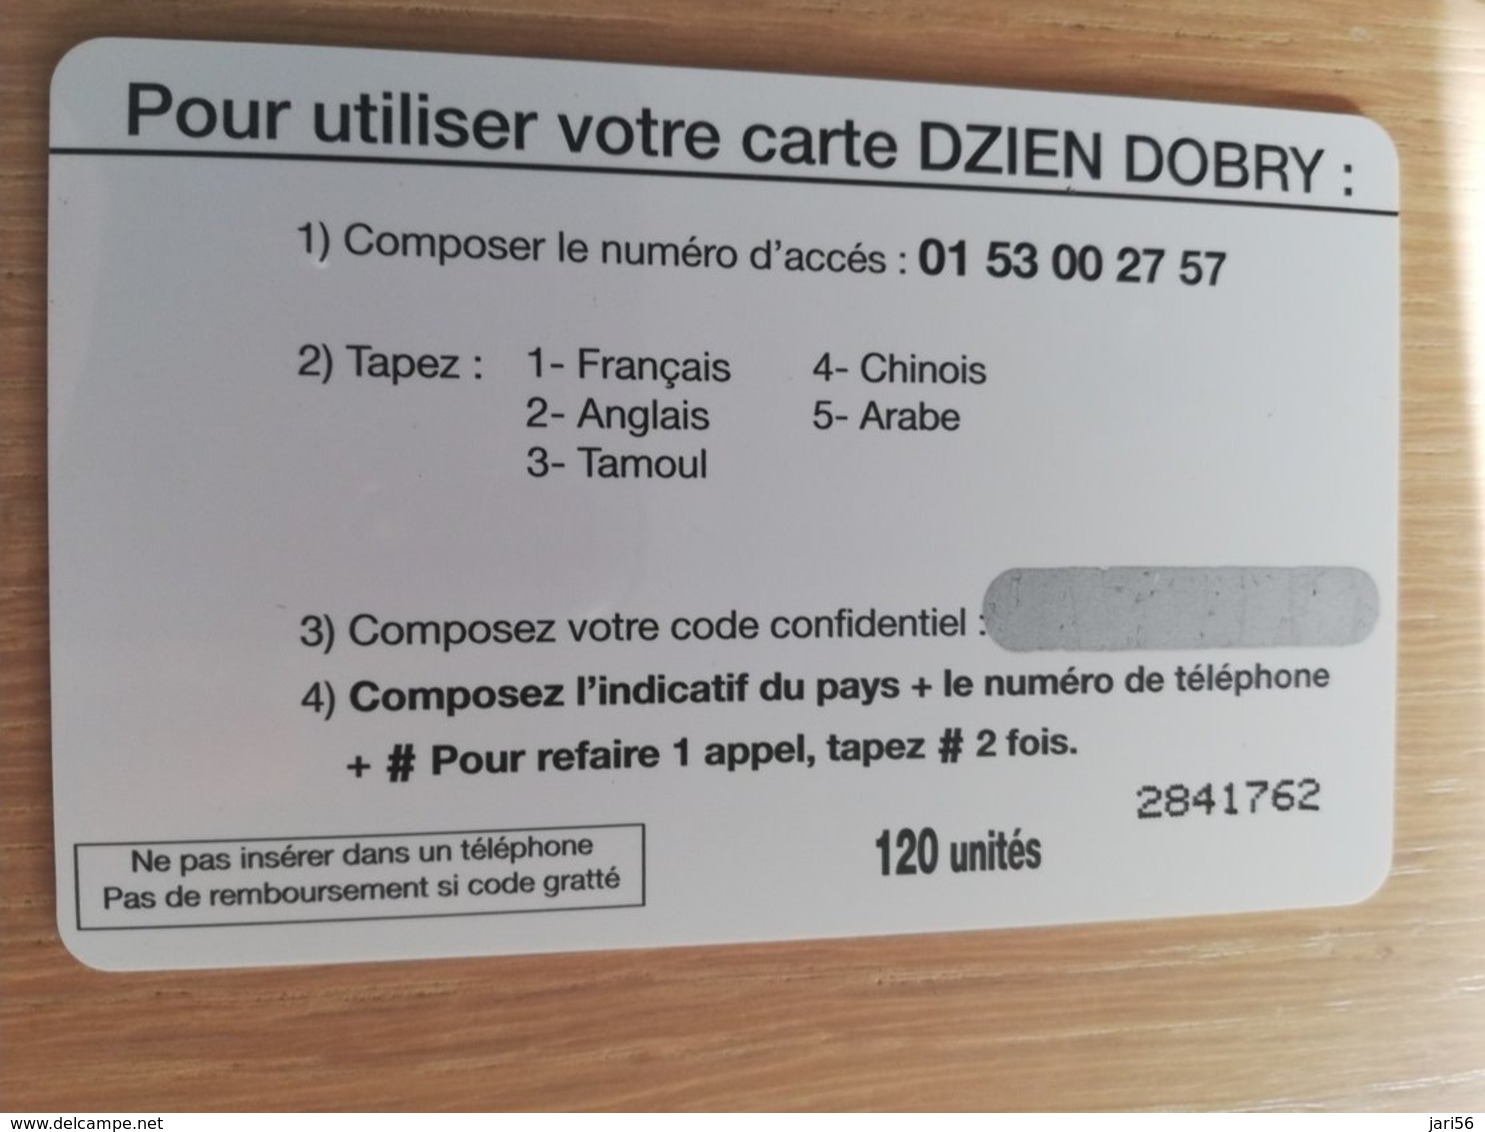 FRANCE/FRANKRIJK  DZIEN DORY PLANE  AUTOBUS  120 UNITES  PREPAID  MINT     ** 1514** - Nachladekarten (Handy/SIM)